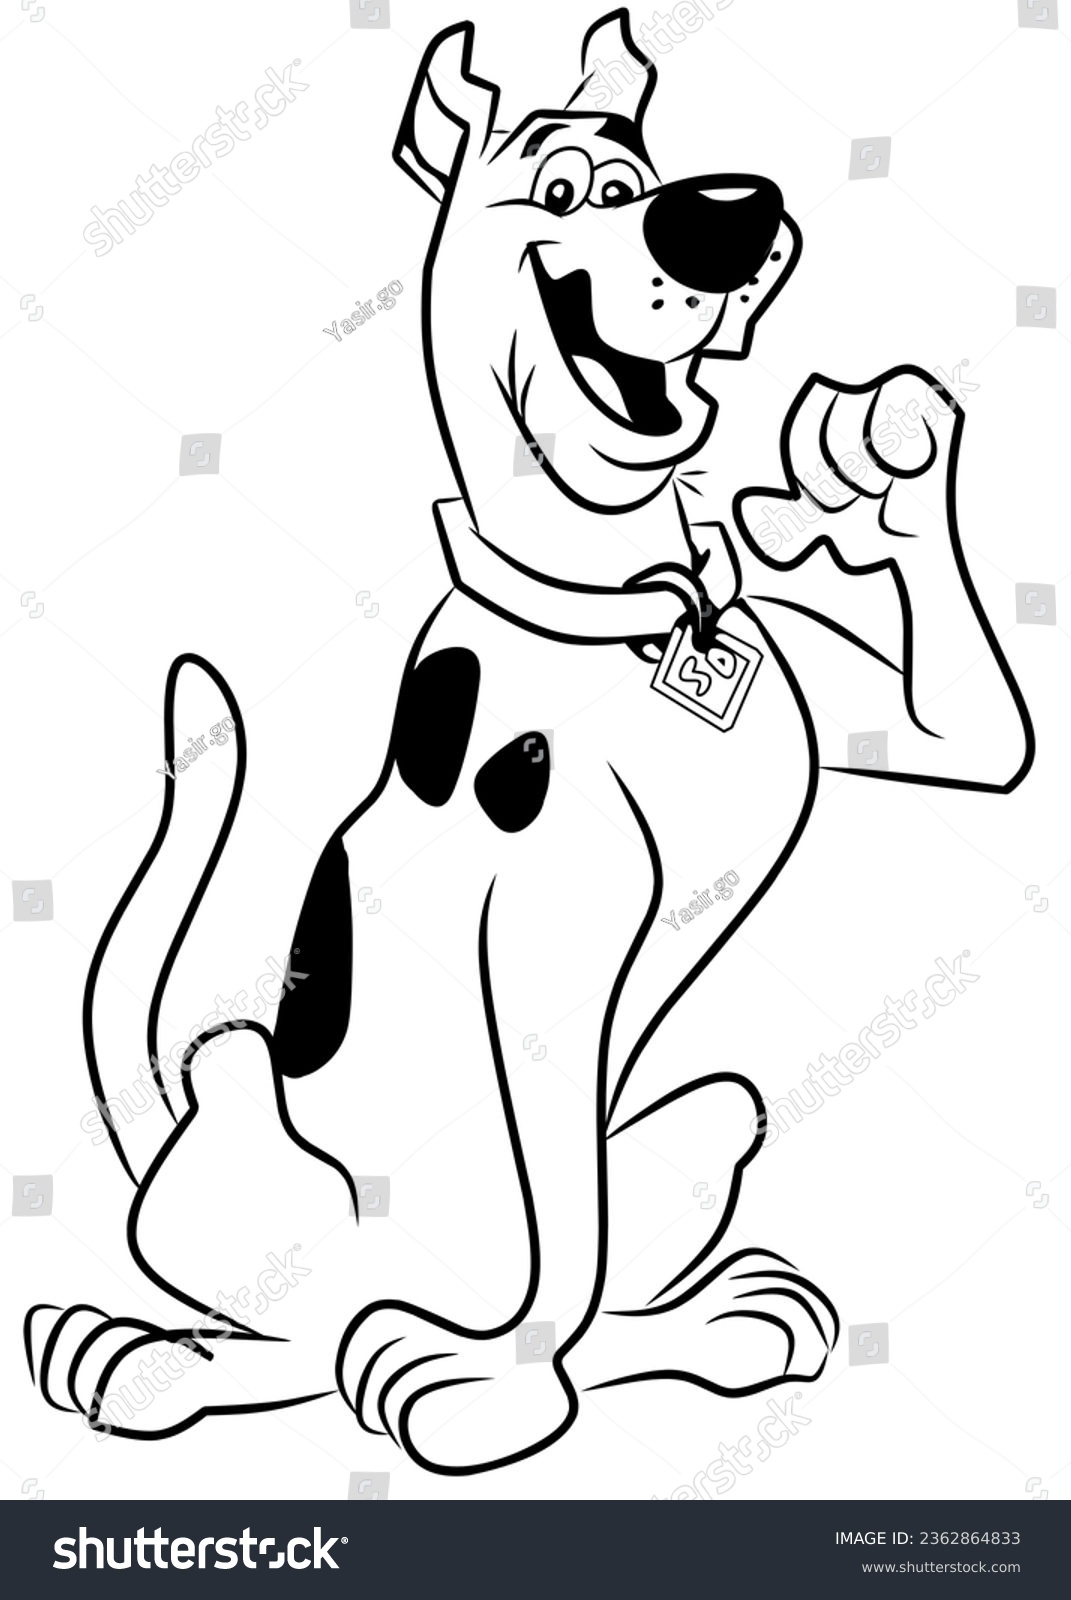 Scoobydoo line art style stock illustration